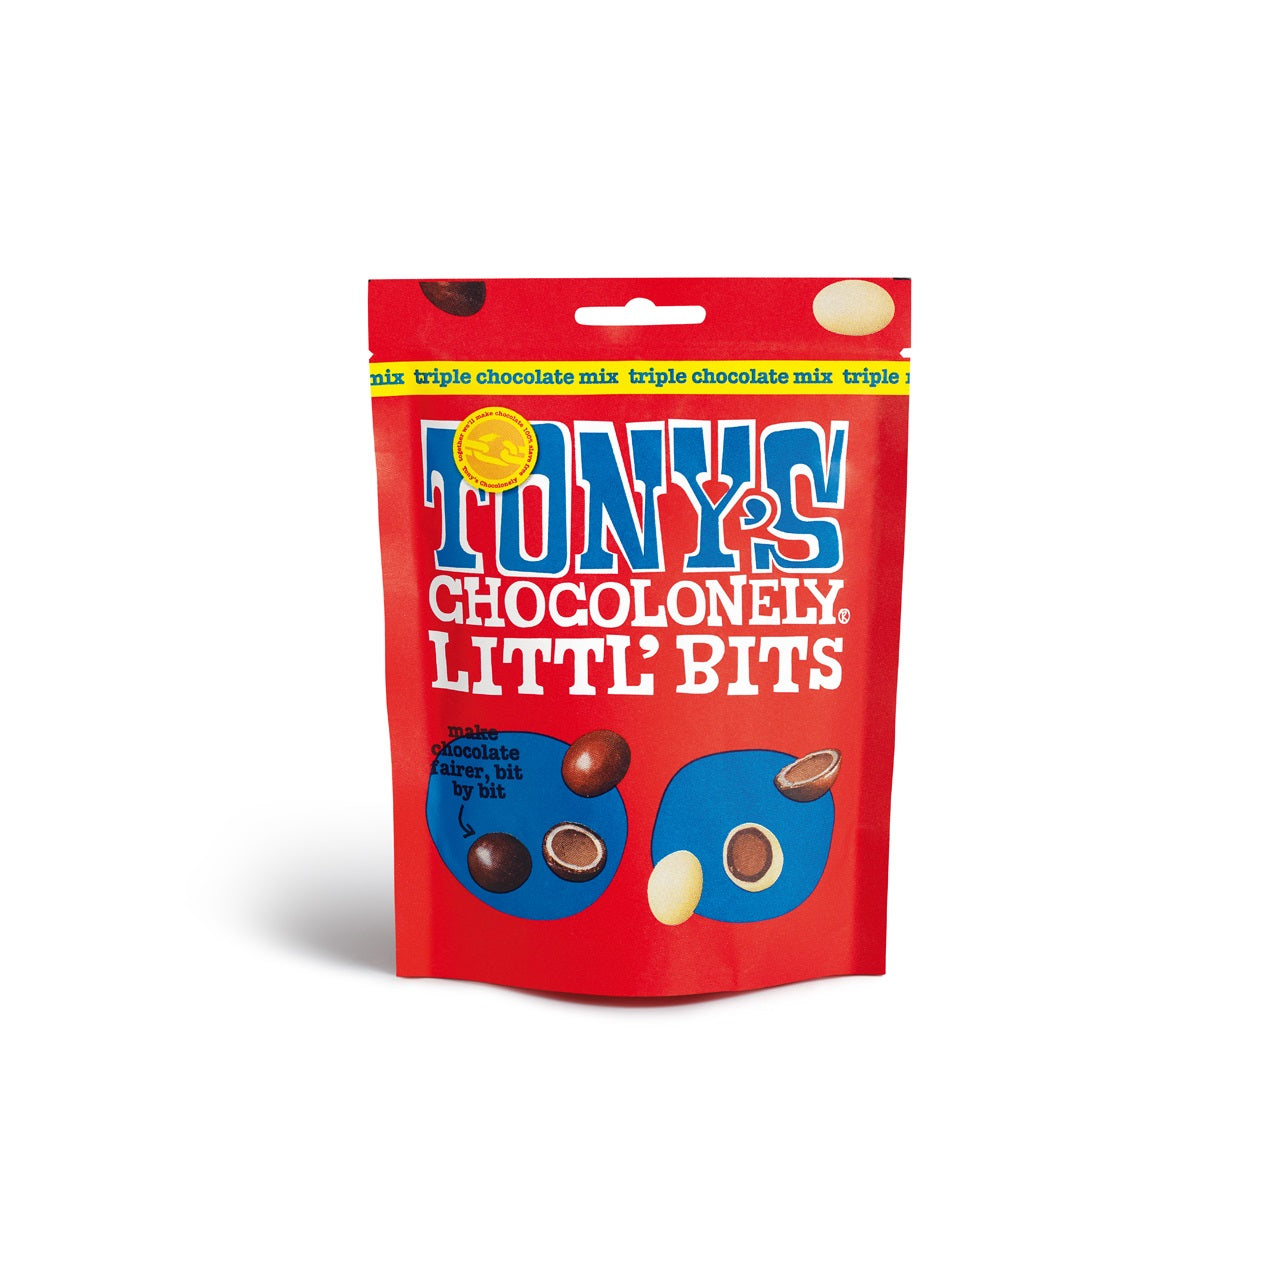 Tony's littl' bits triple chocolate mix